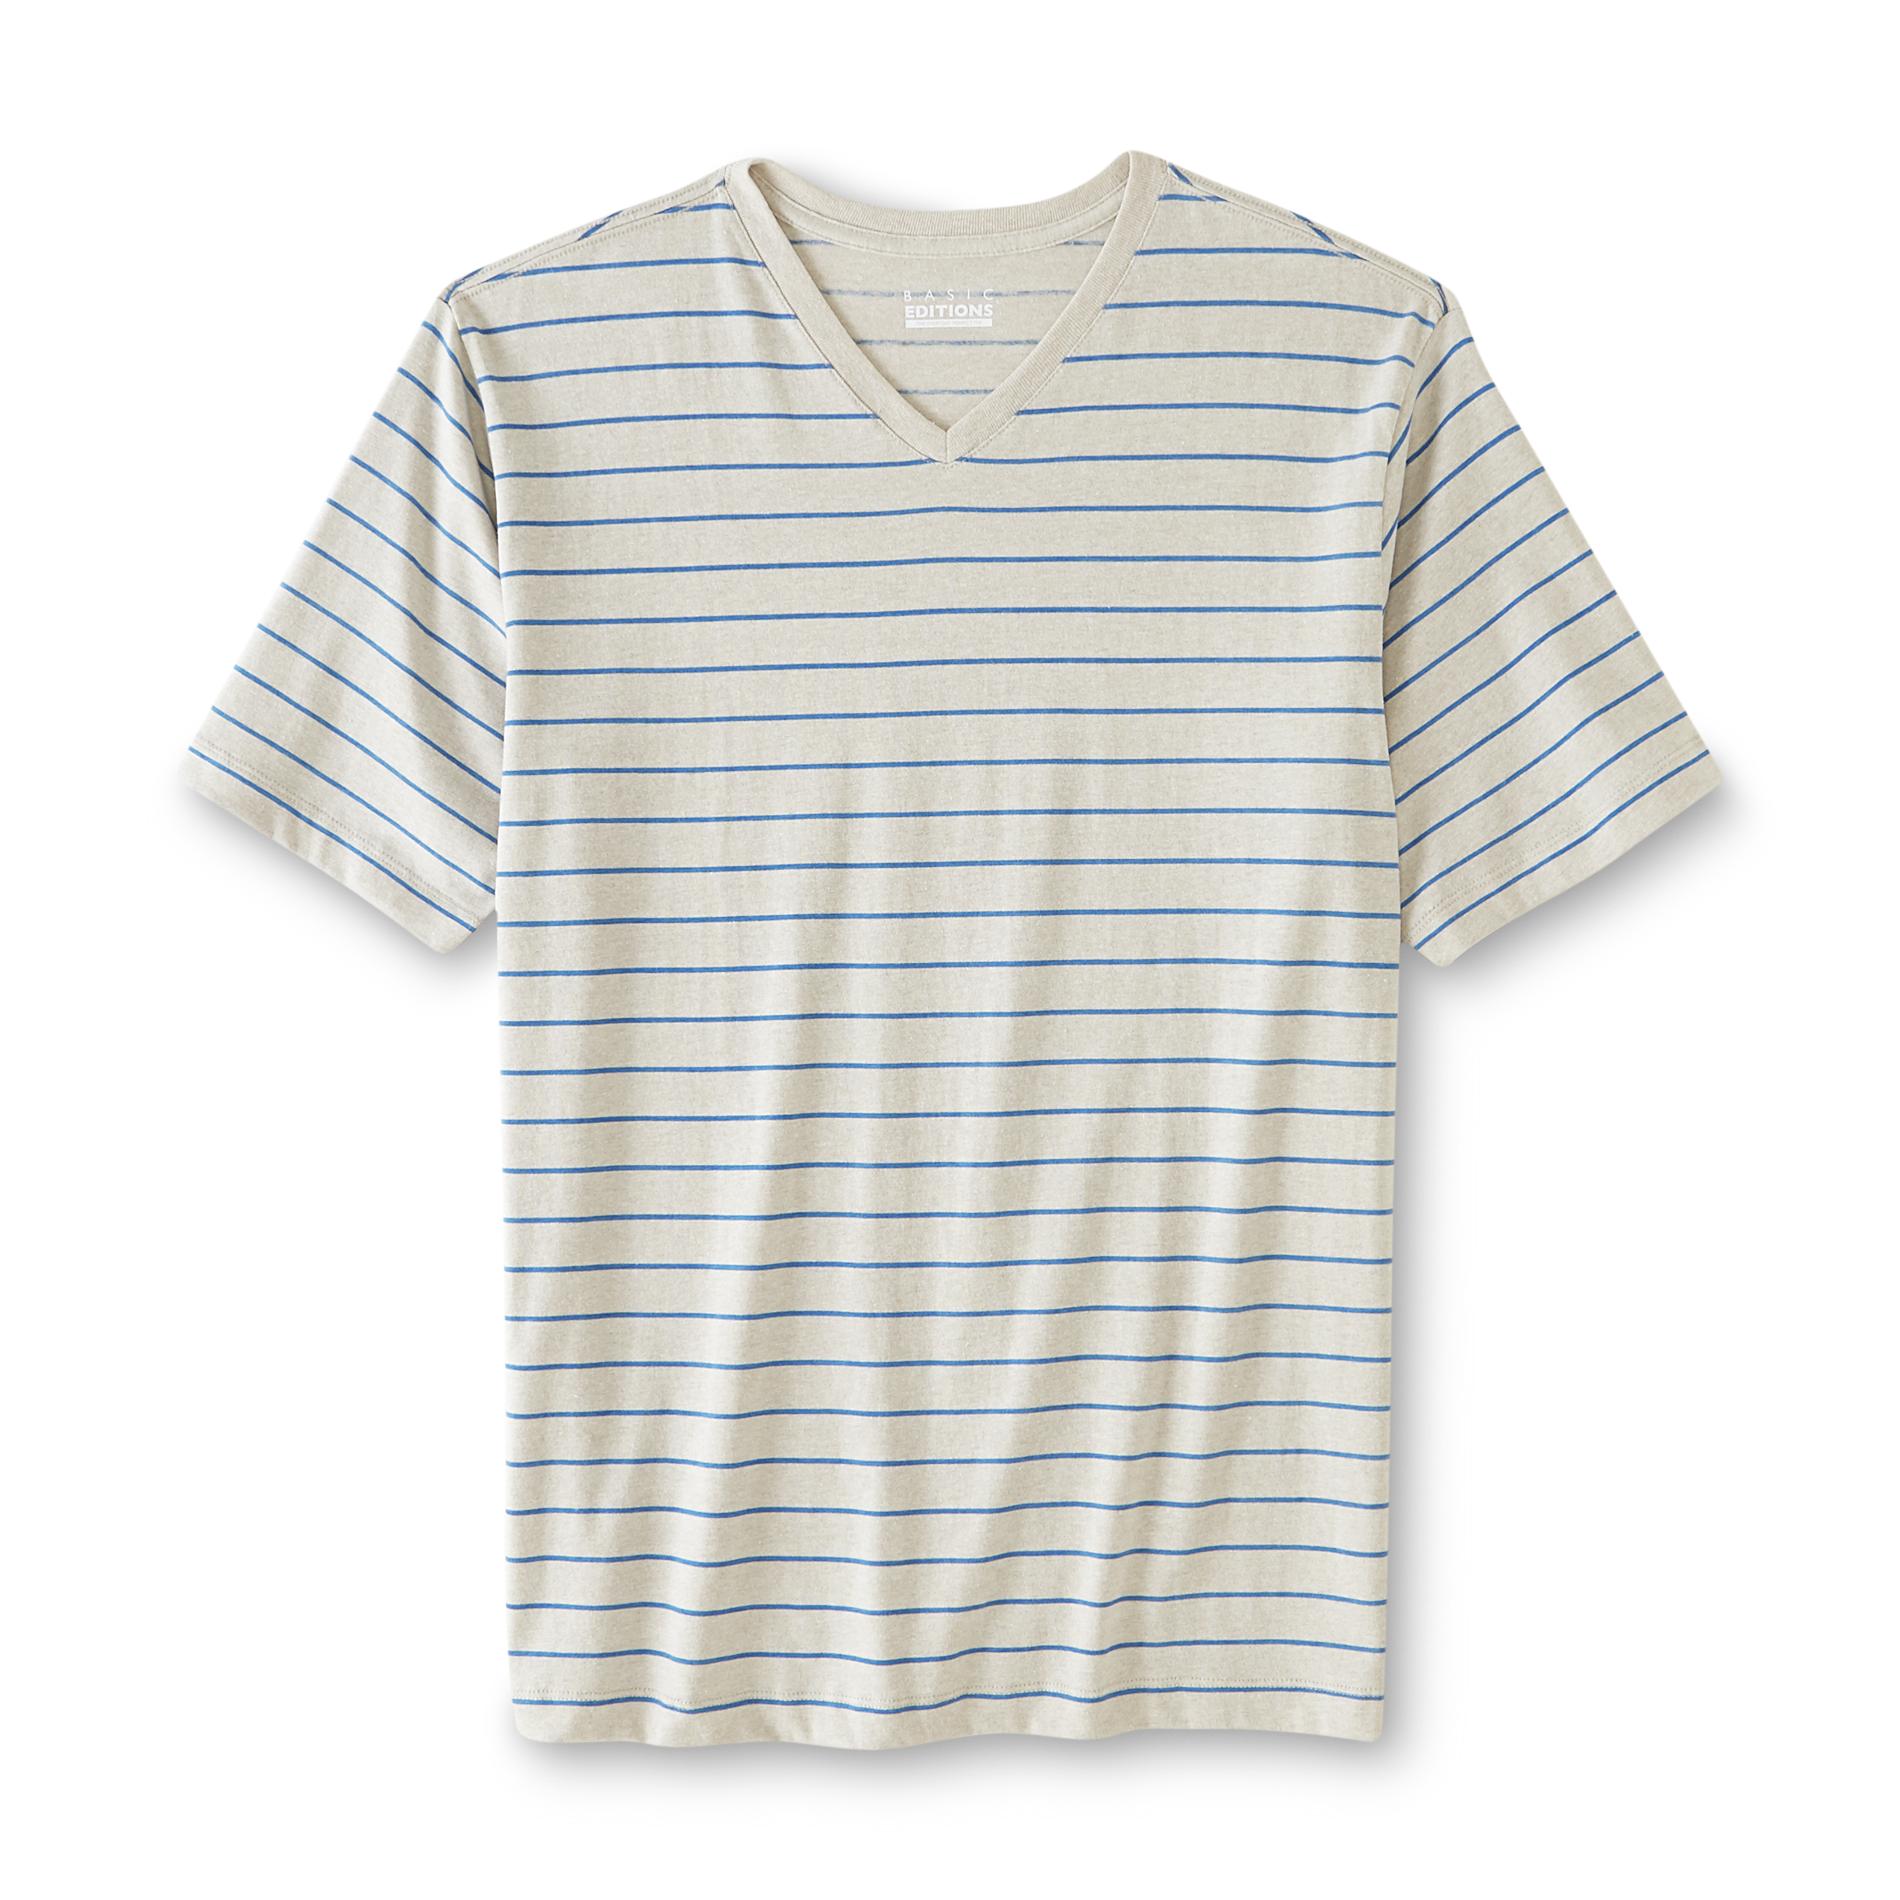 Basic Editions Men's V-Neck T-Shirt - Striped